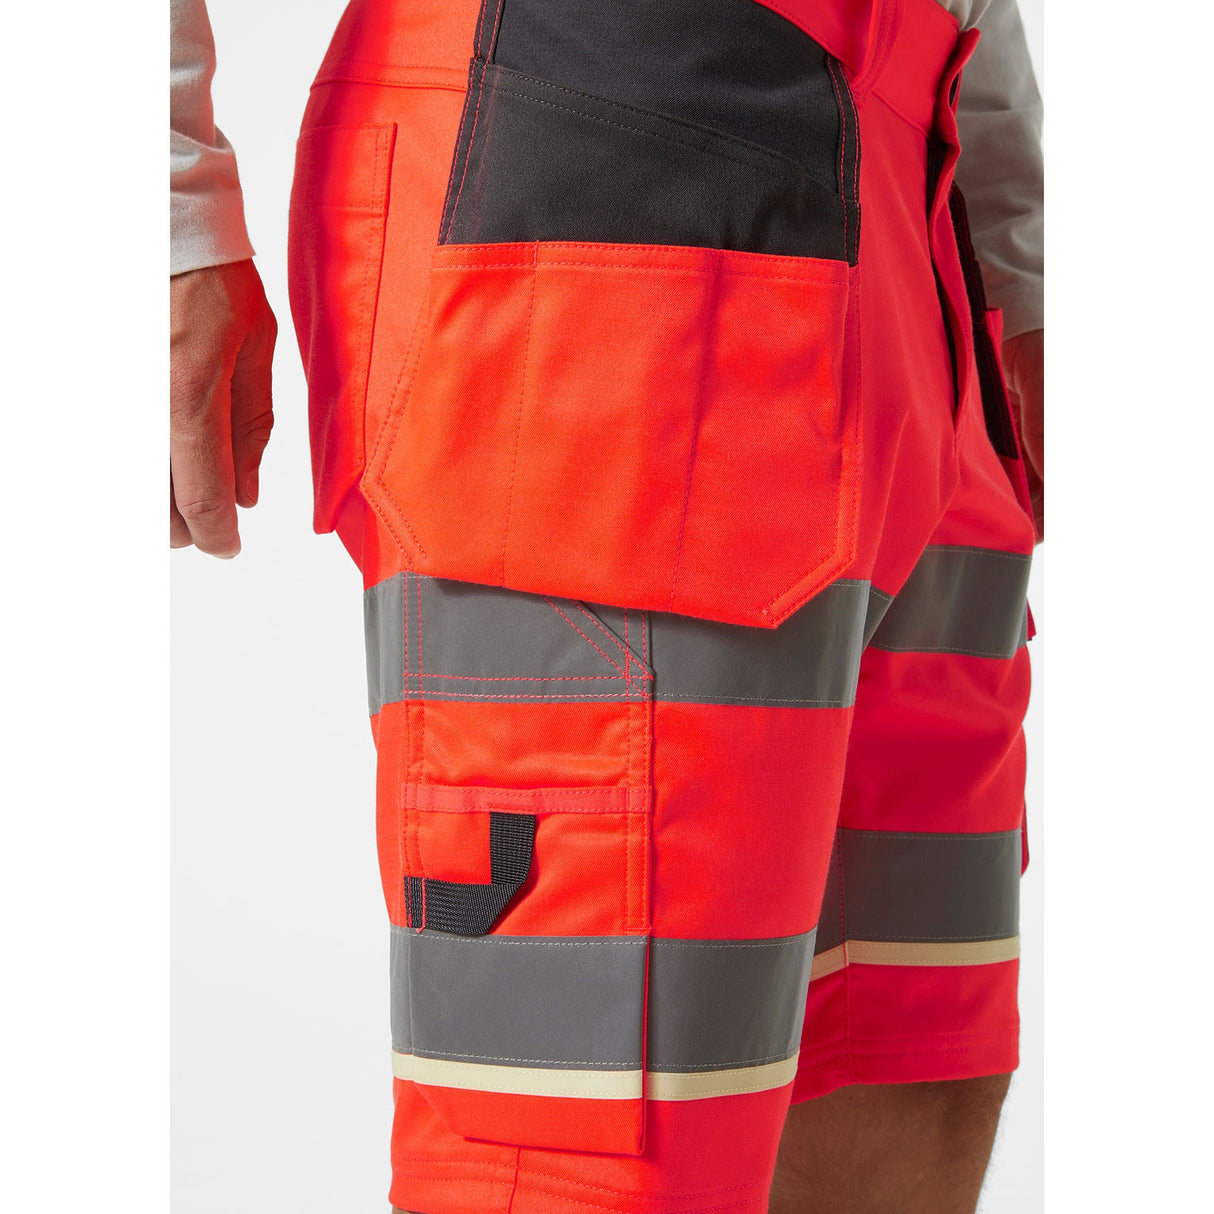 Helly Hansen Workwear Uc-Me Construction Shorts